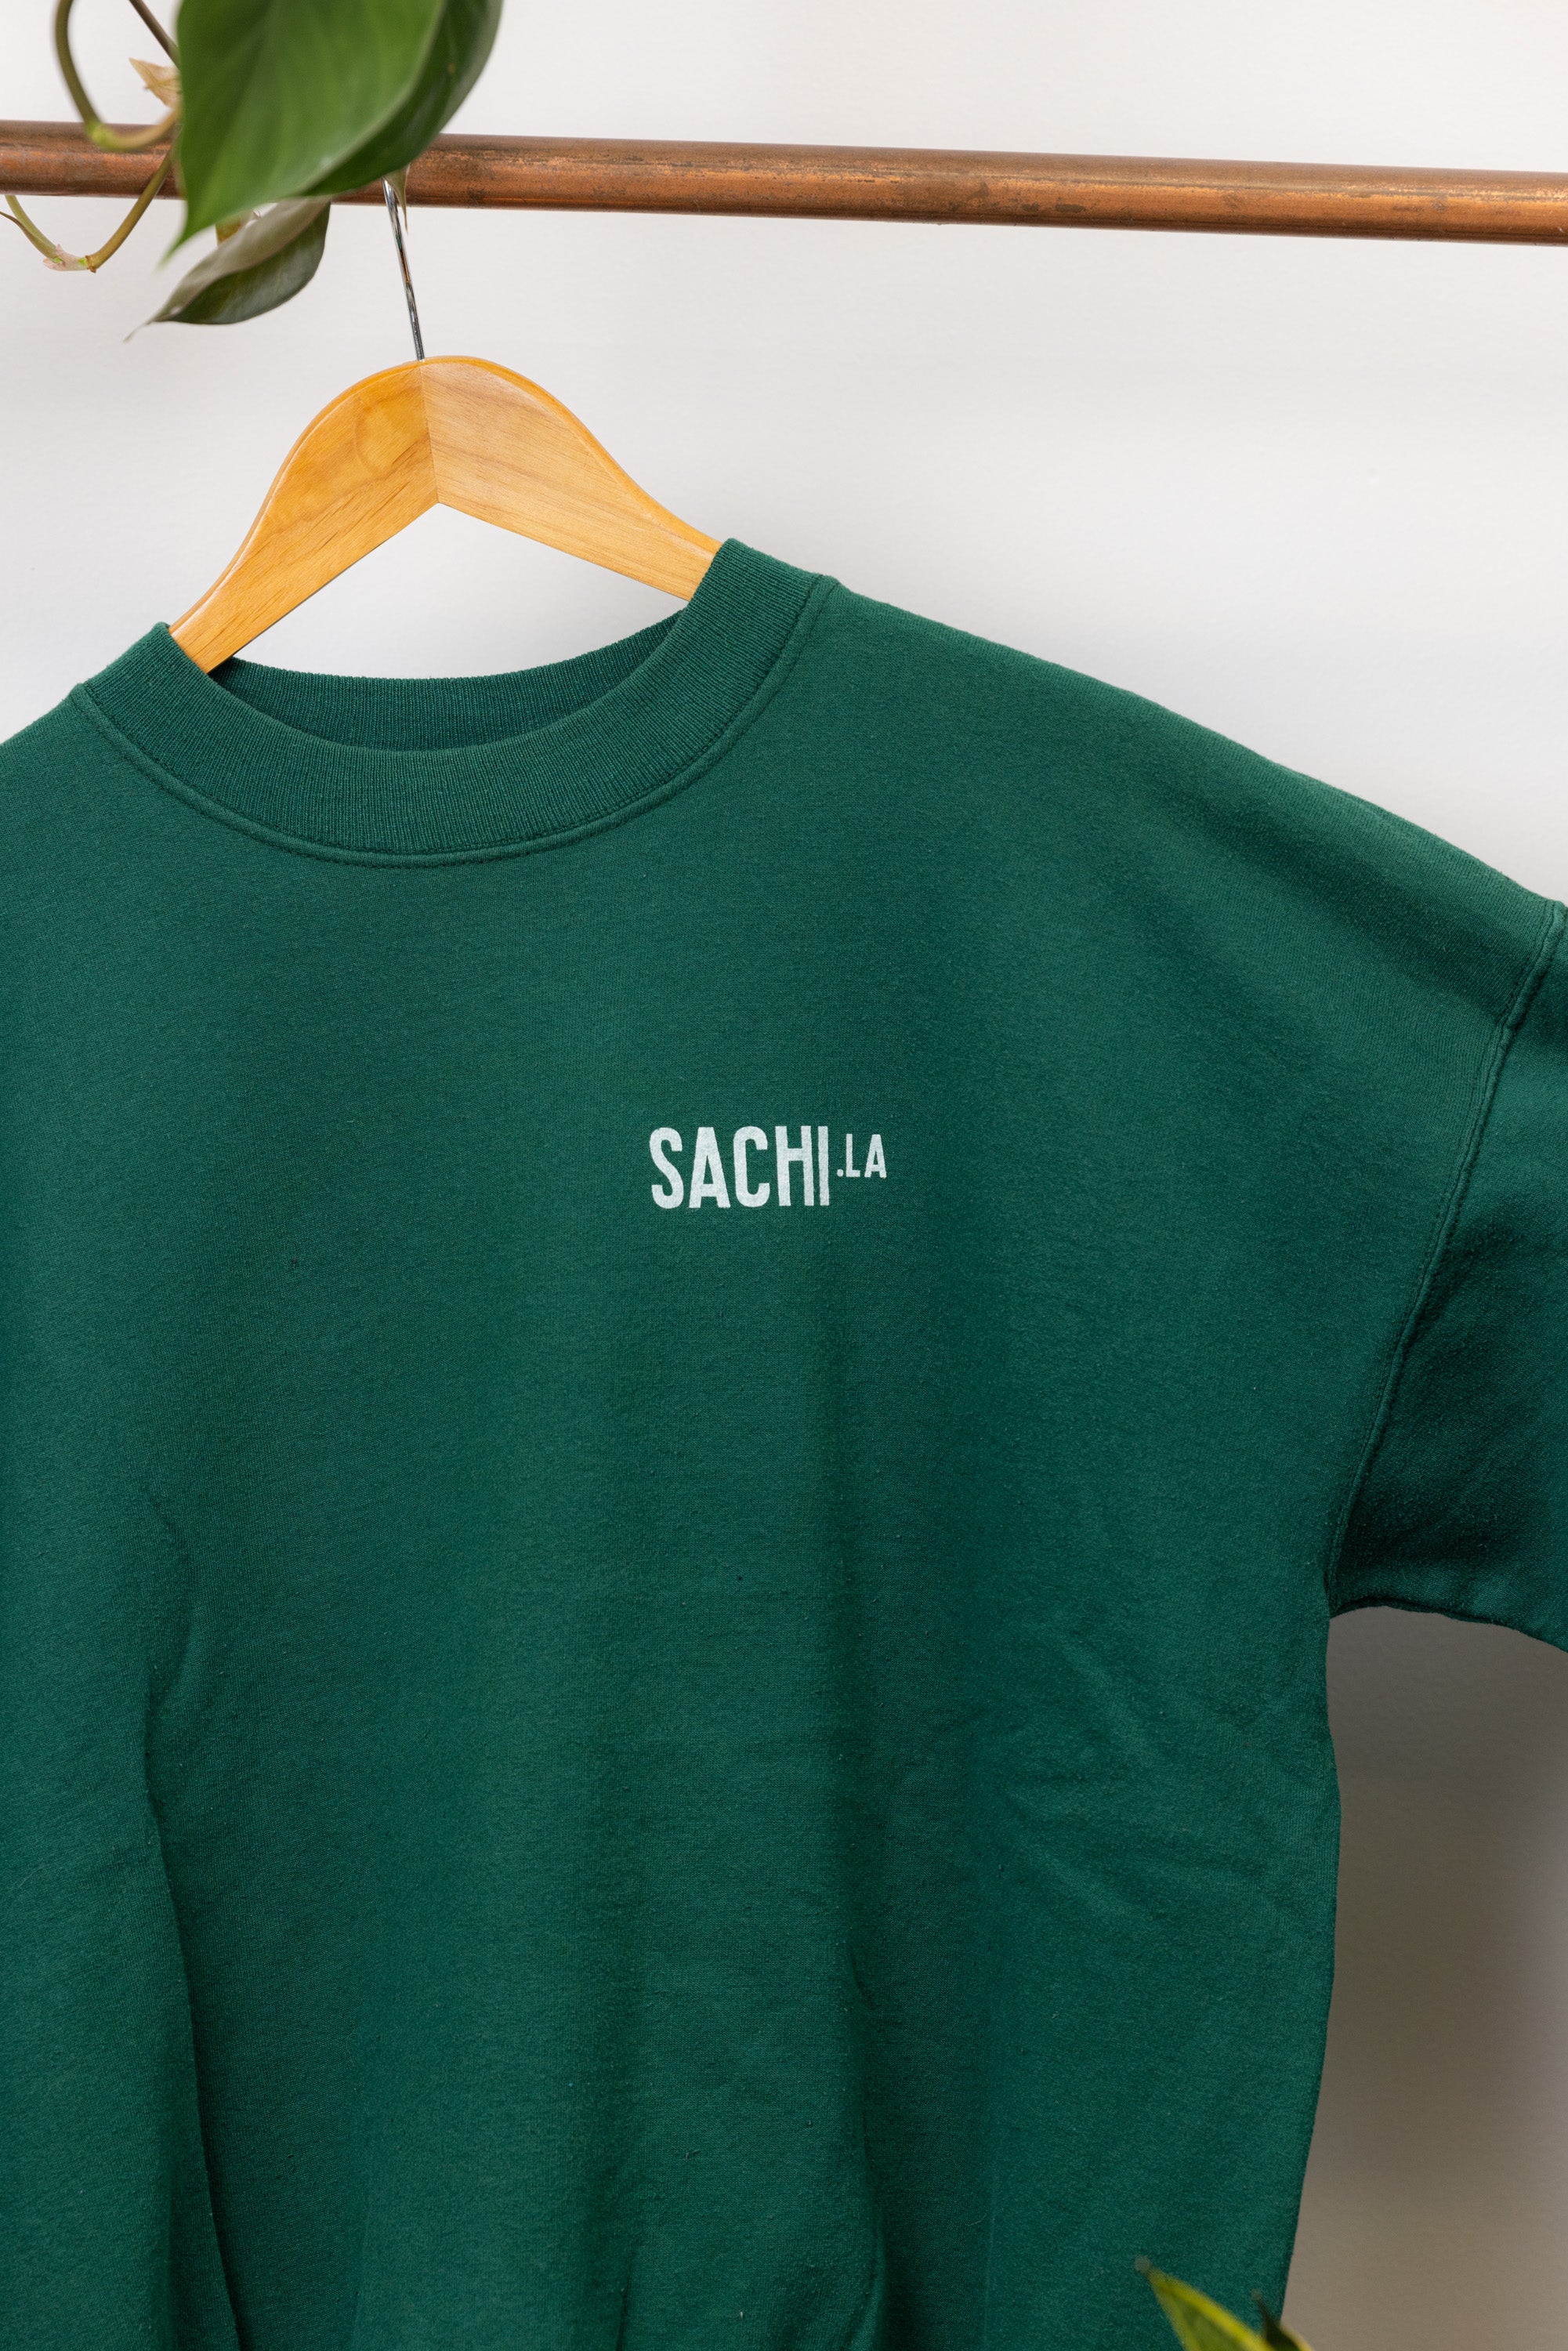 Forest SACHI.LA Vintage Crewneck Sweatshirt